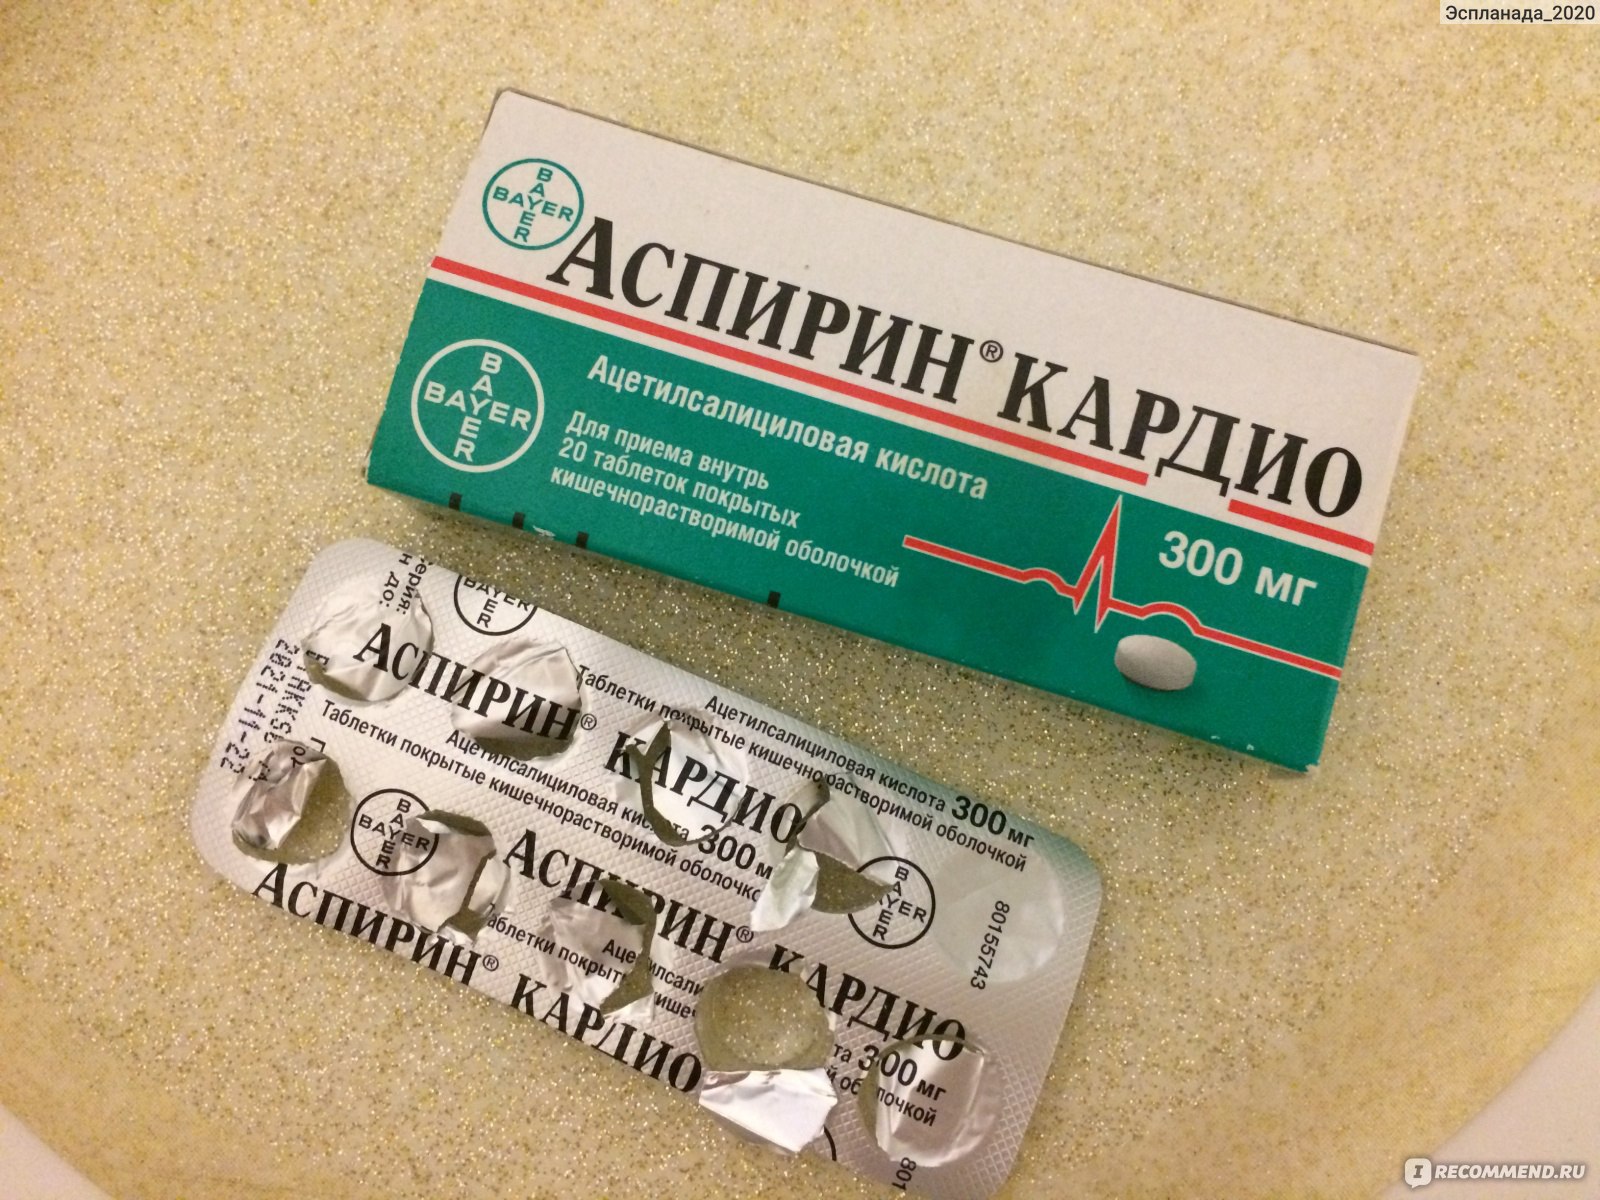 Аспирин от тромбов. Аспирин кардио таблетки 300мг. Ацетилсалициловая кислота 300 мг. Аспирин кардио 300 мг. Аспирин кардио упаковка.